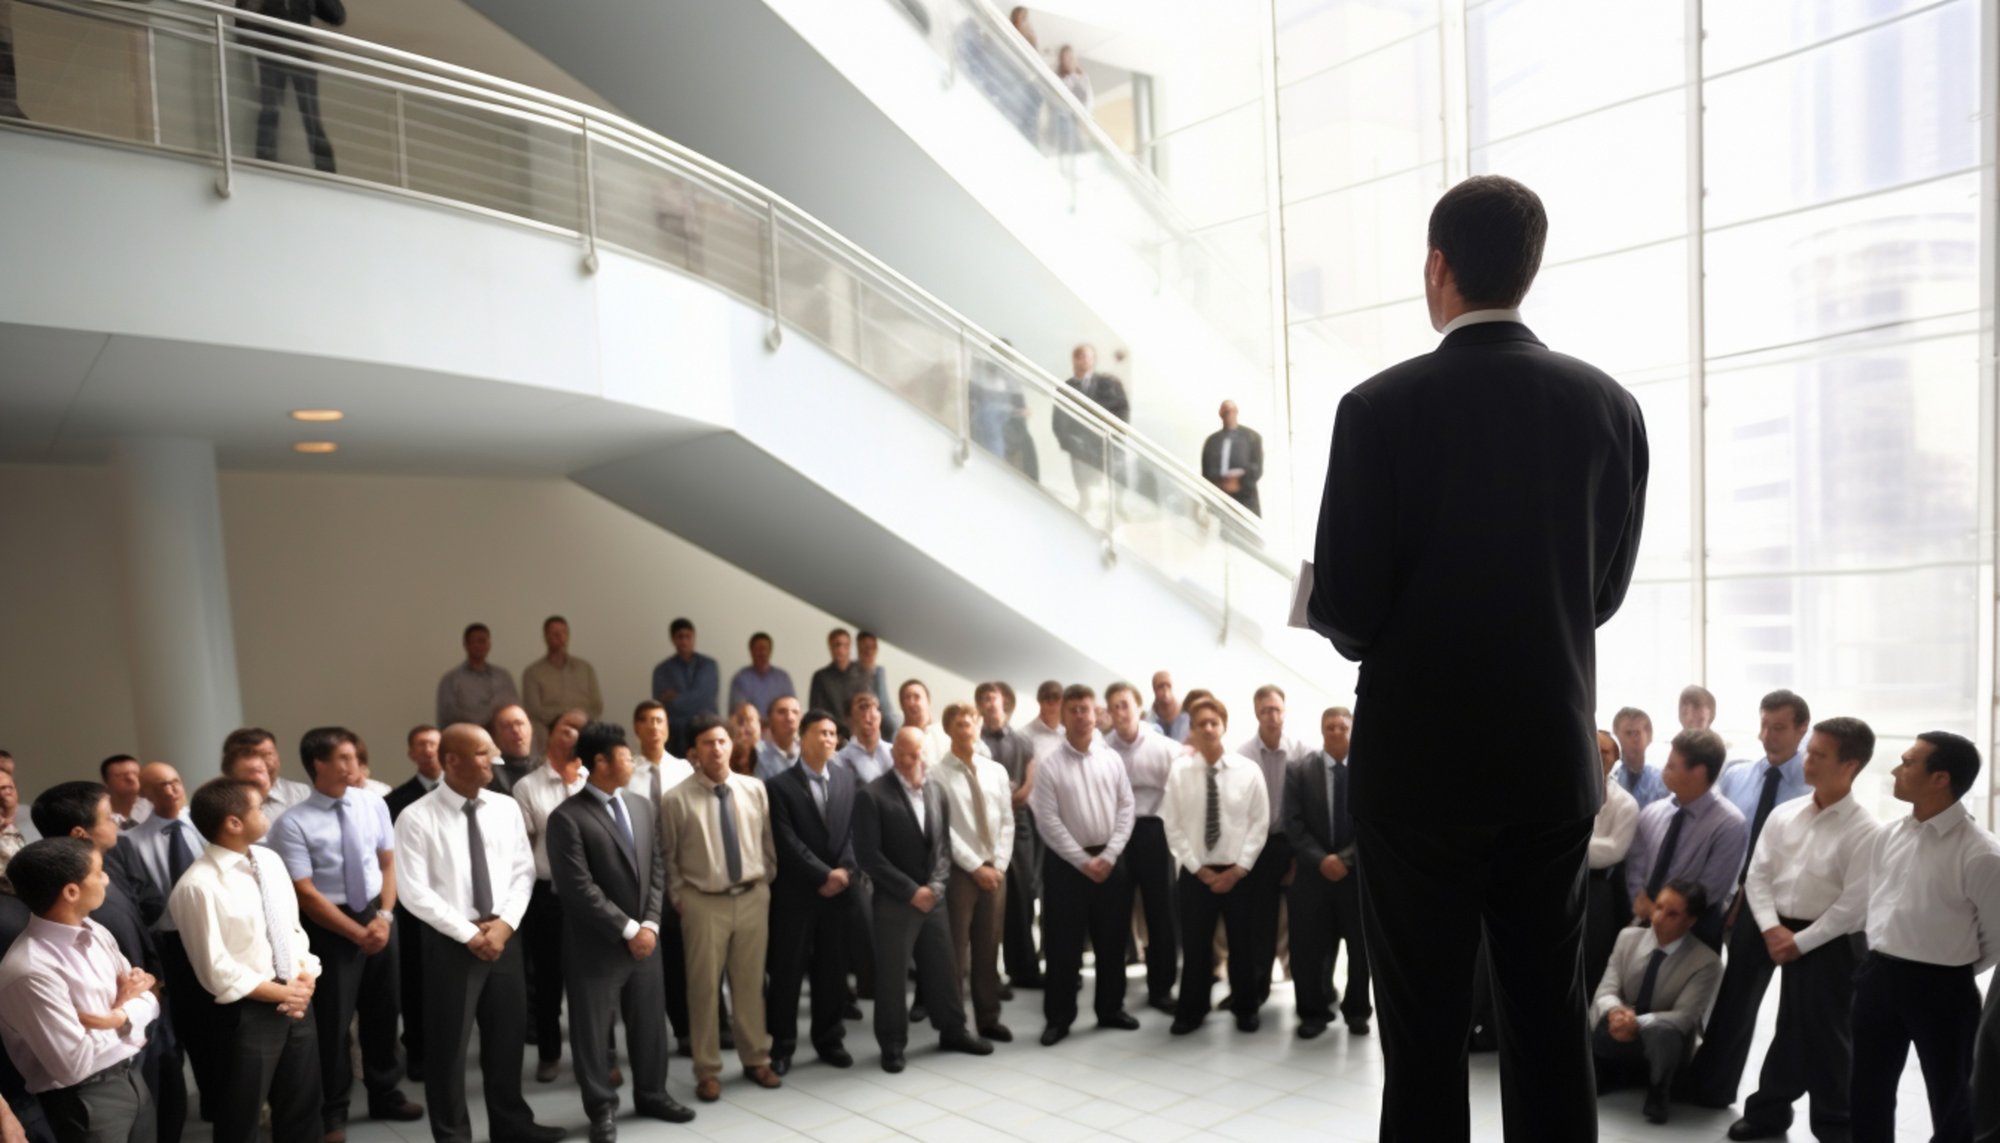 leadership-skills-unrecognizable-man-giving-motivational-speech-group-employees-1